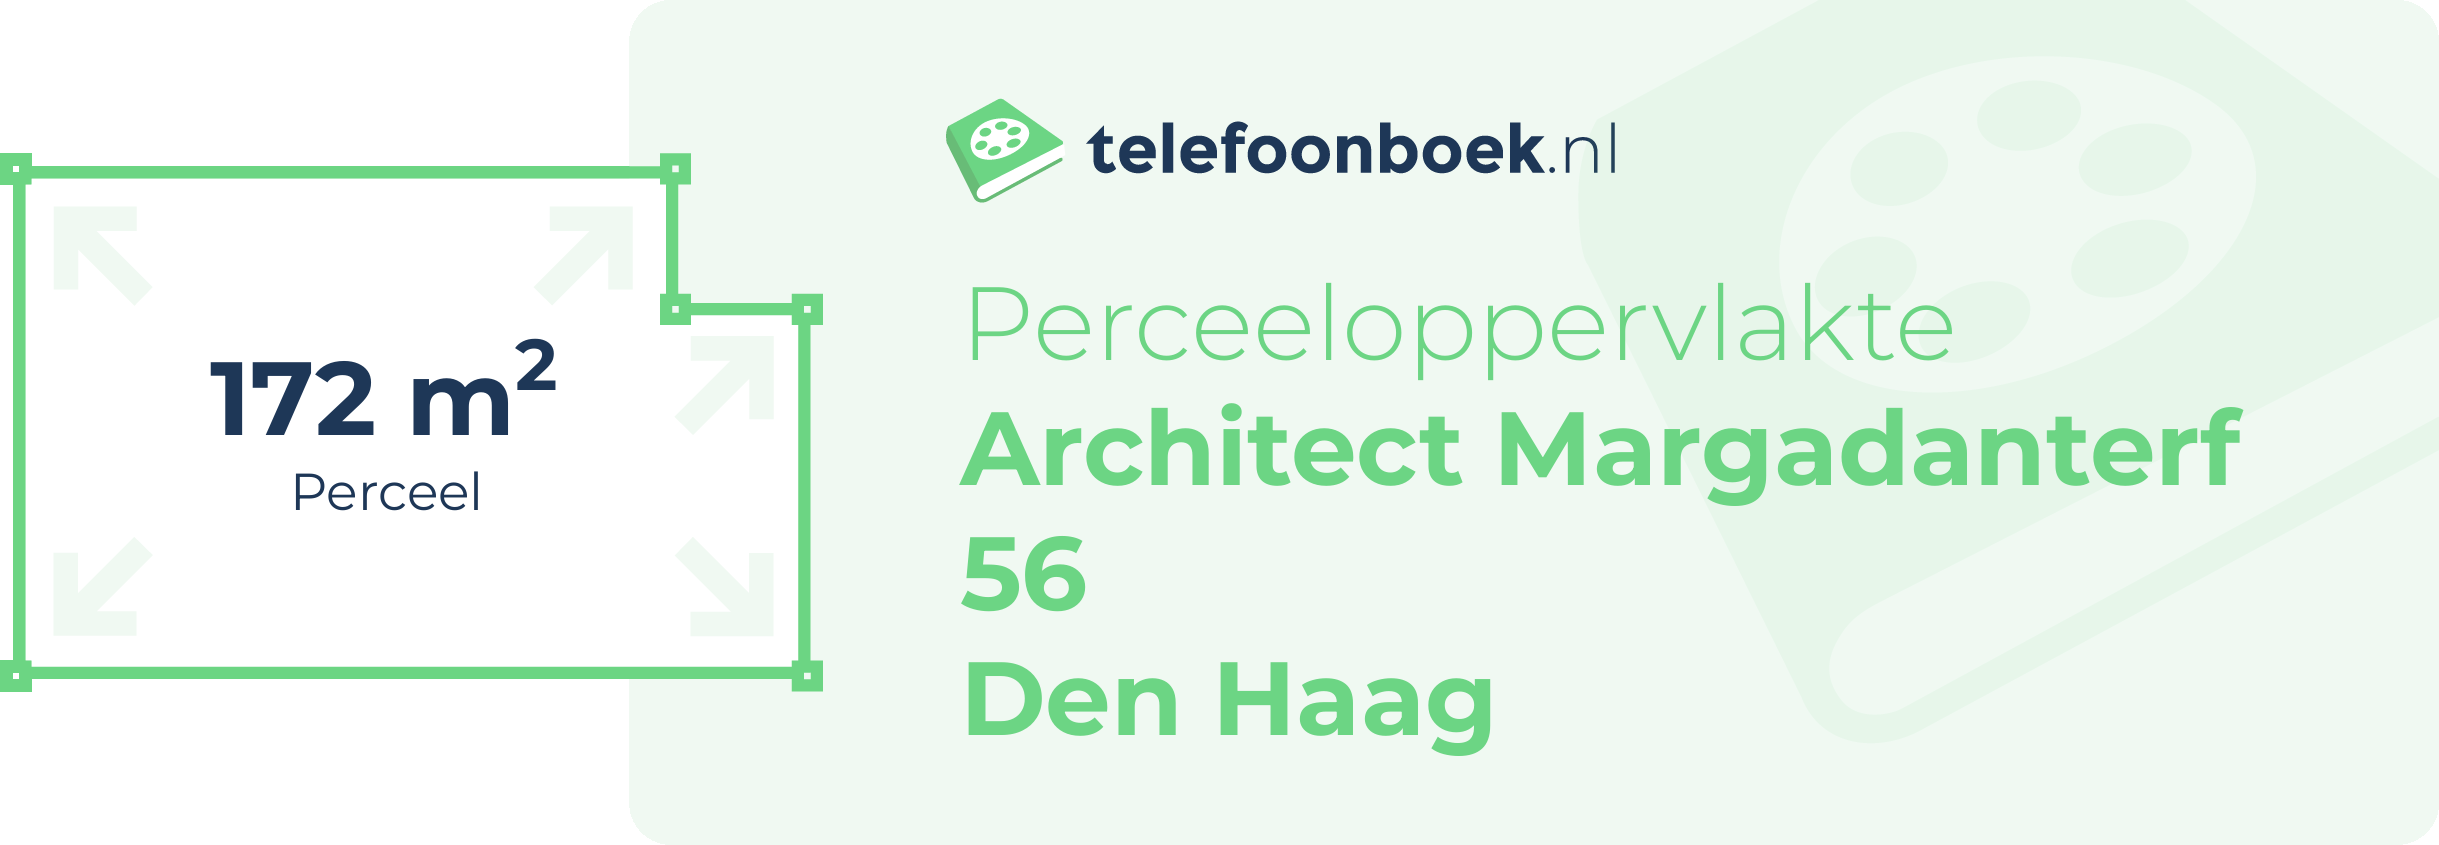 Perceeloppervlakte Architect Margadanterf 56 Den Haag